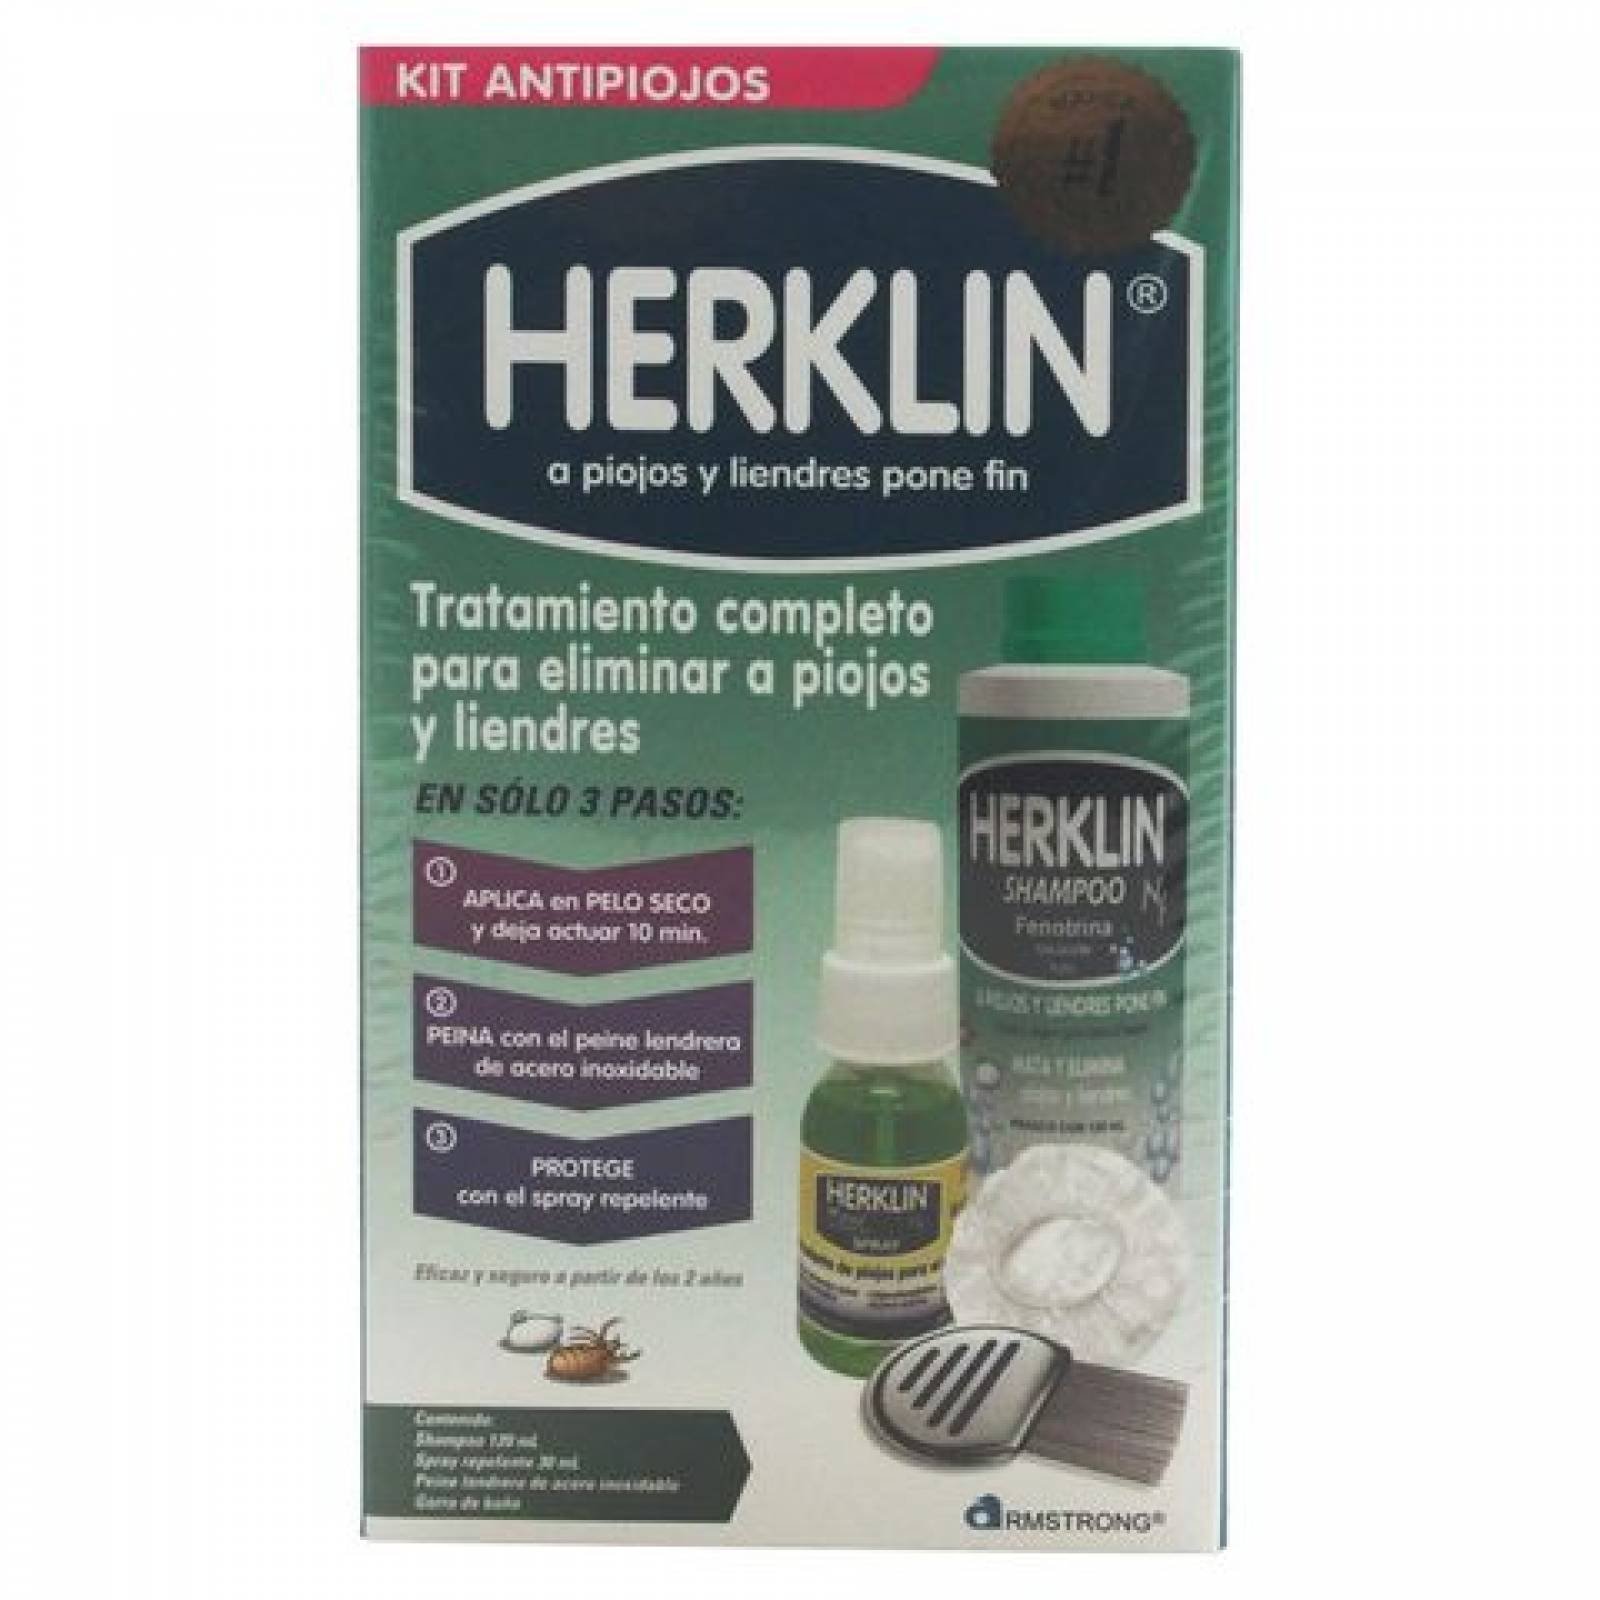 Spray Repelente - 120ml - Herklin